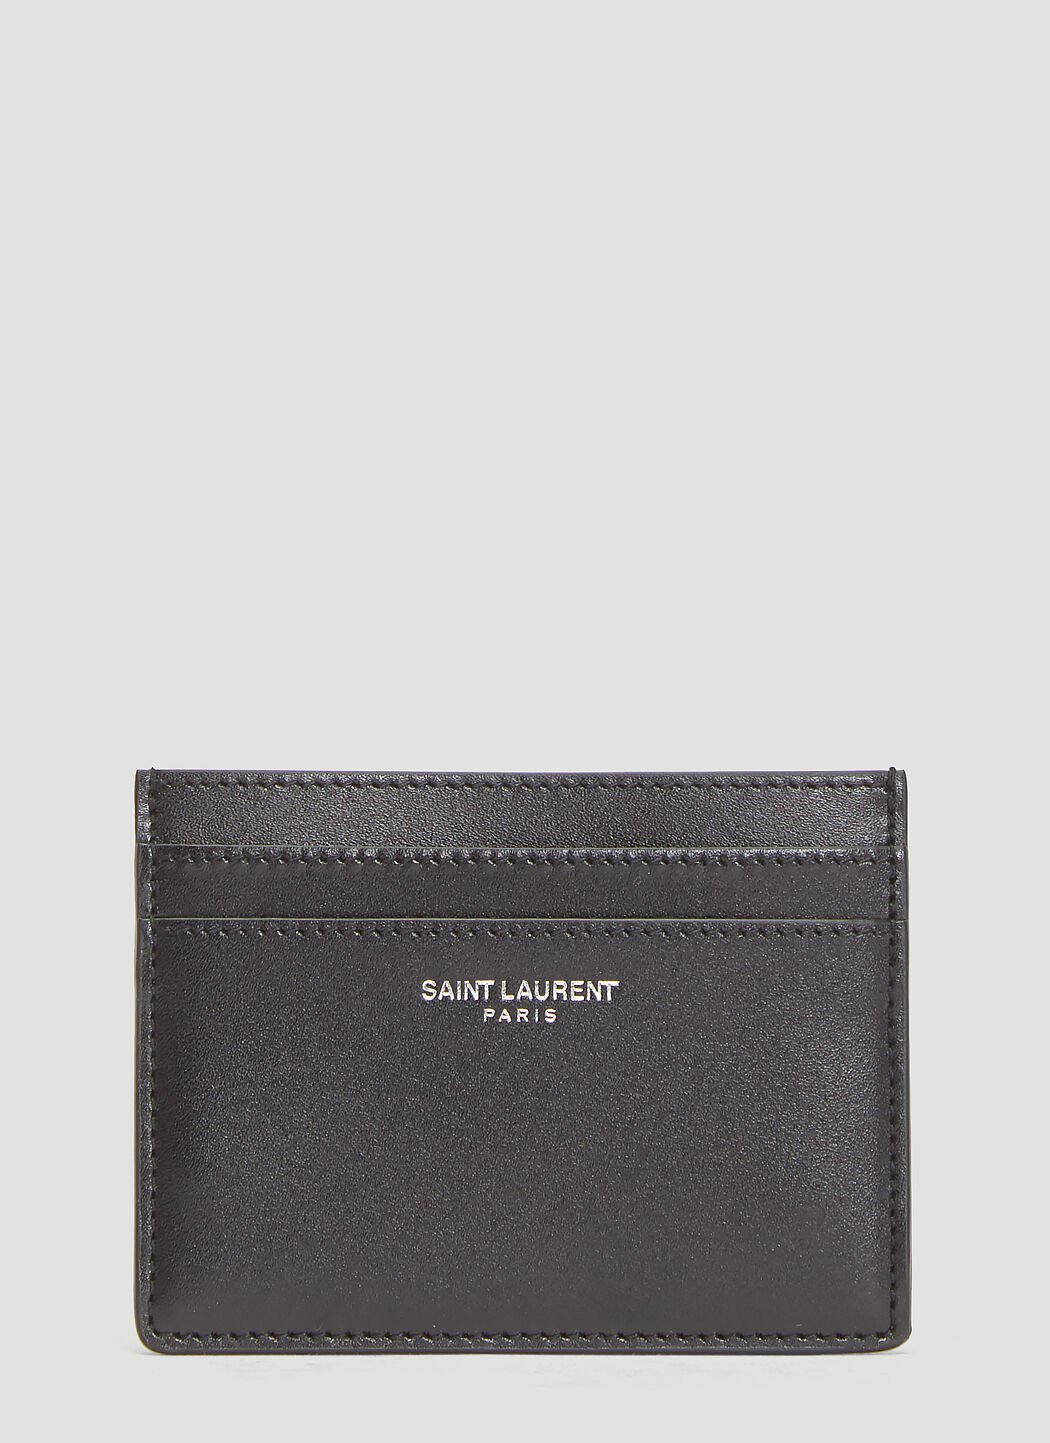 Saint Laurent Credit Card Holder ブラック sla0238013